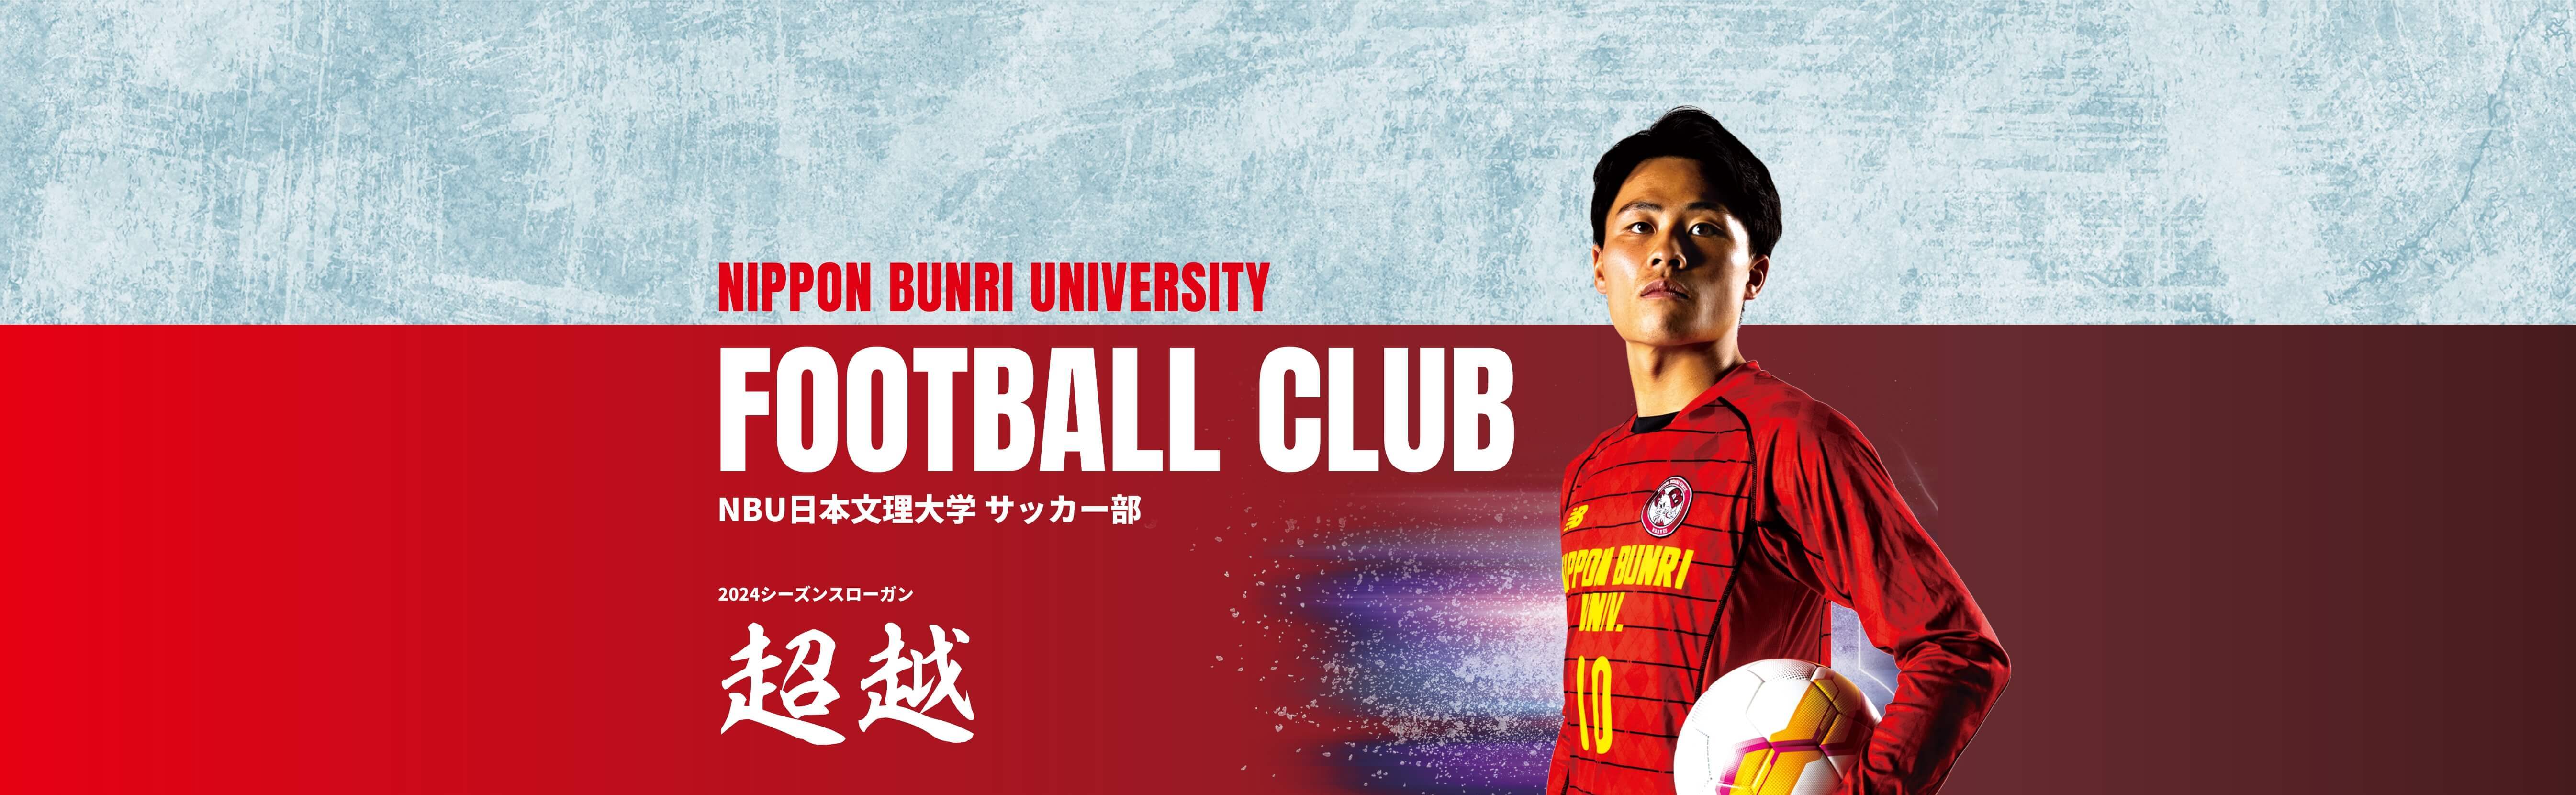 NBU日本文理大学サッカー部